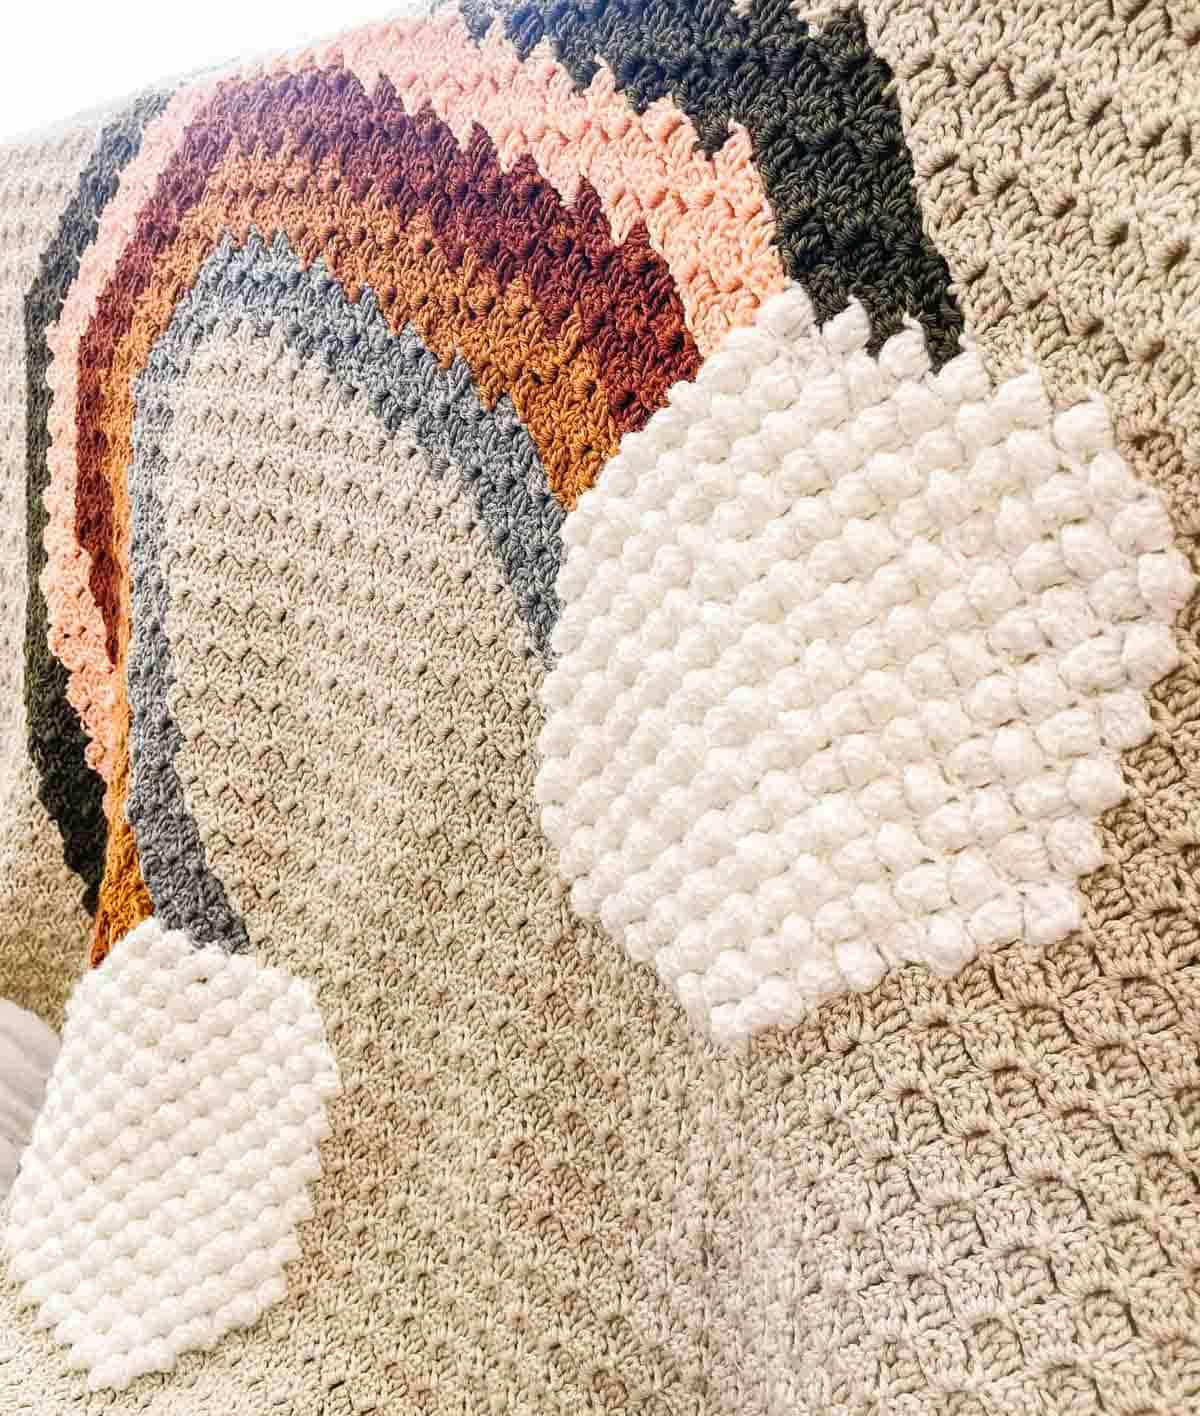 Crochet puff stitch clouds on a rainbow blanket.